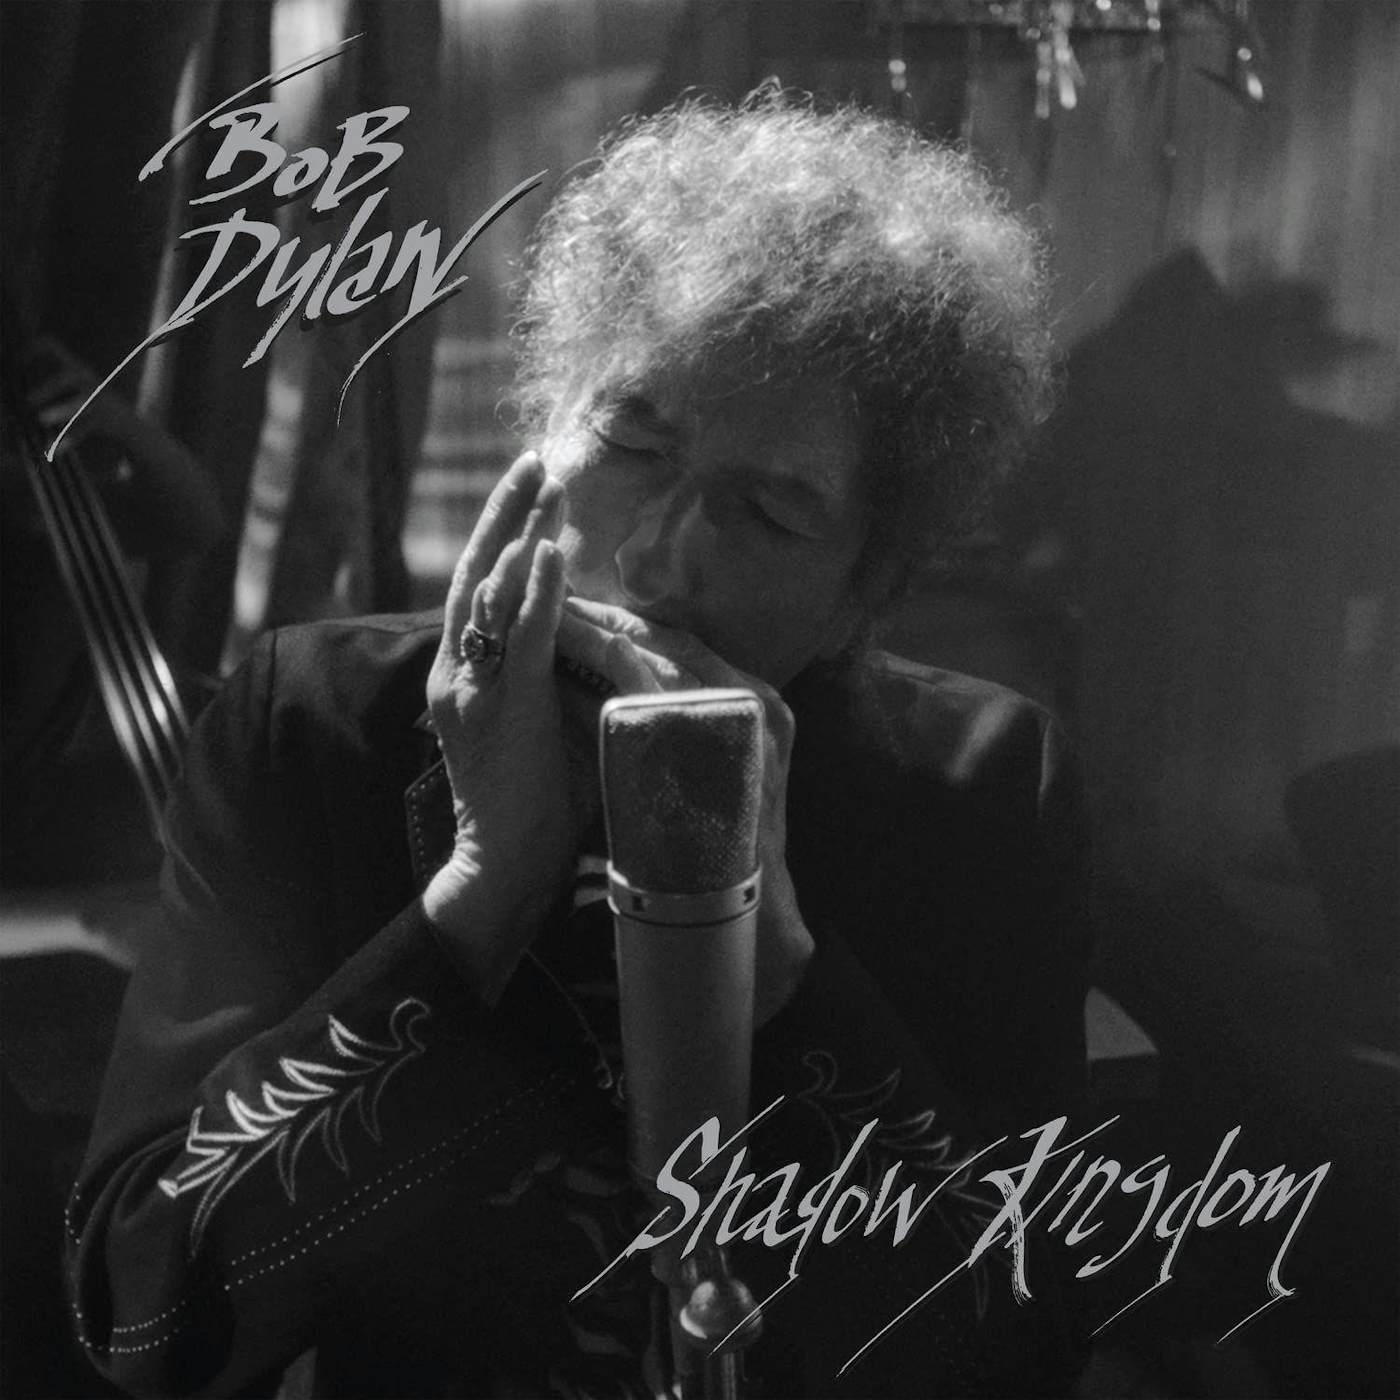 Bob Dylan Shadow Kingdom (2lp) Vinyl Record